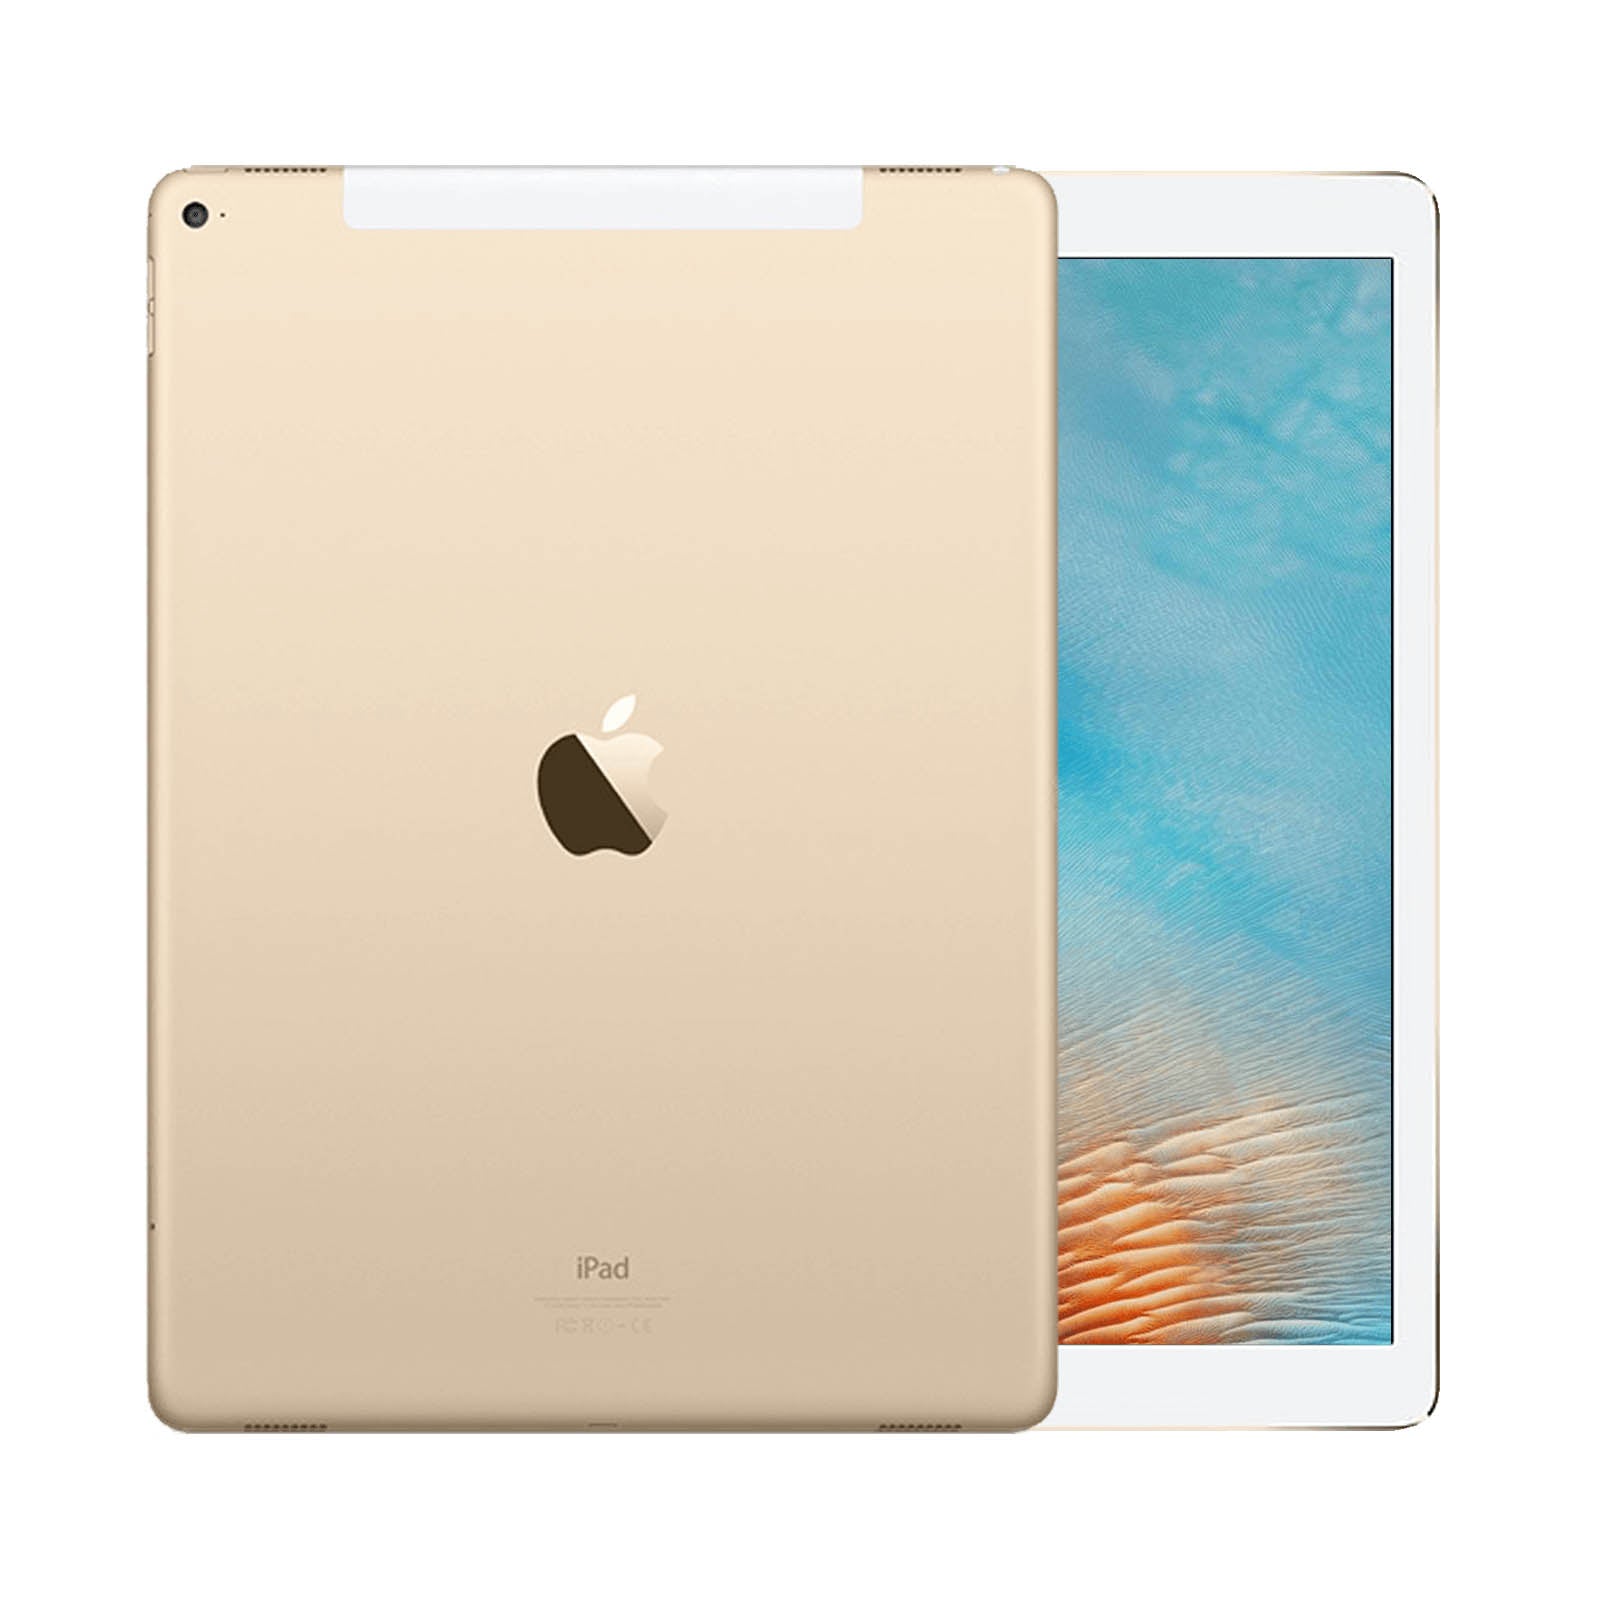 iPad Pro 12.9 Inch 2nd Gen 64GB Gold Good - Unlocked